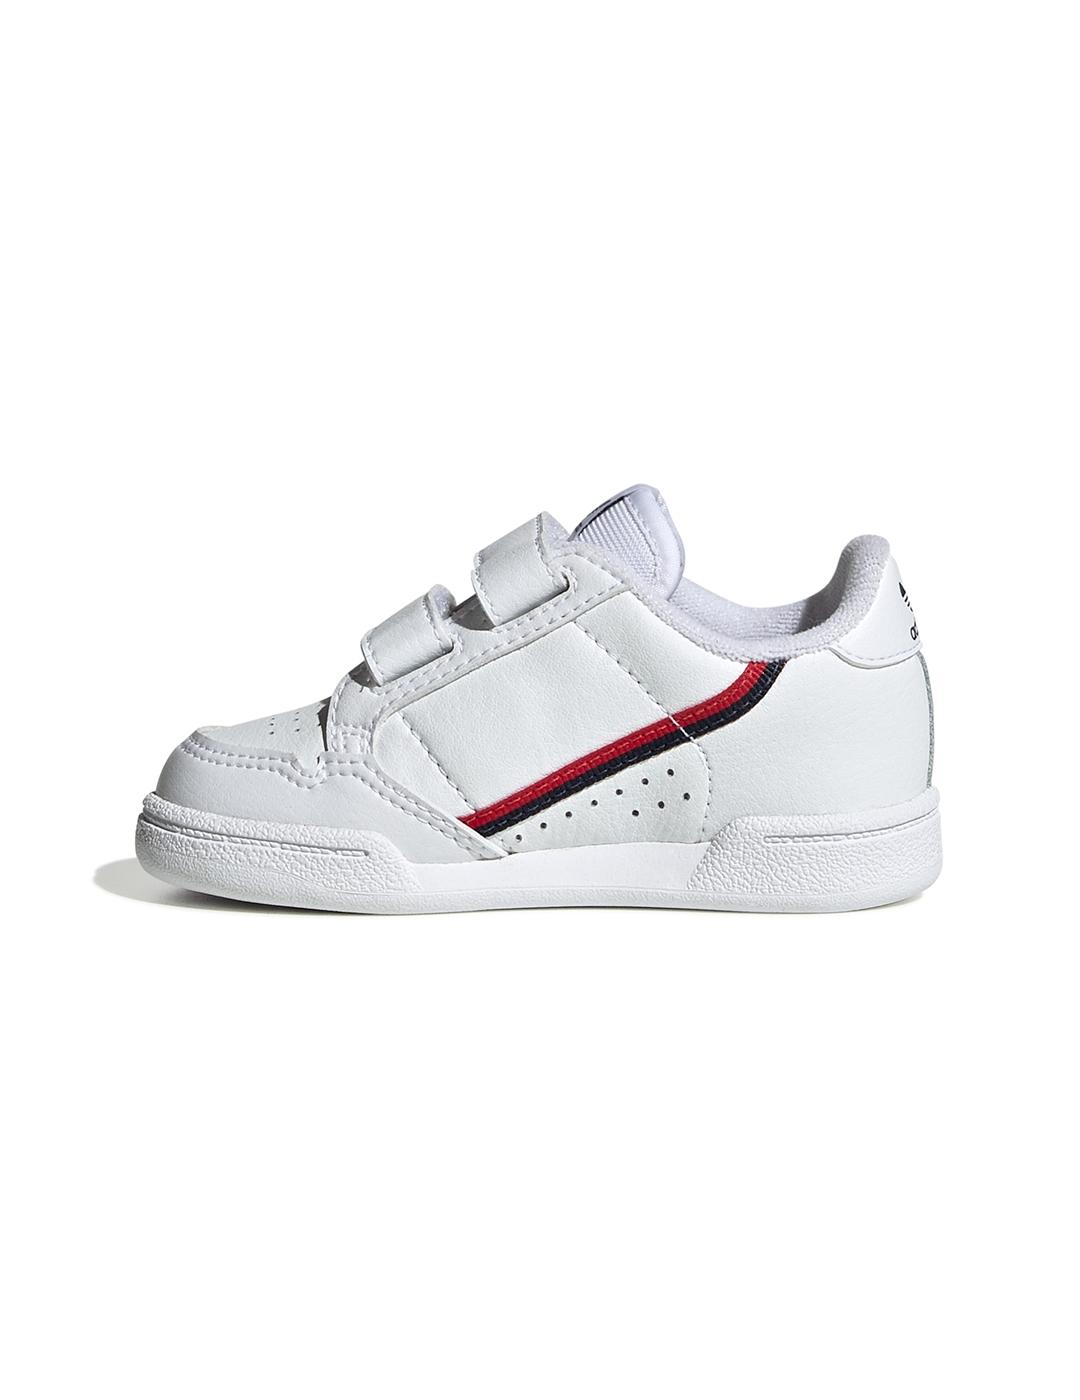 Zapatillas Adidas Continental 80 CF I White